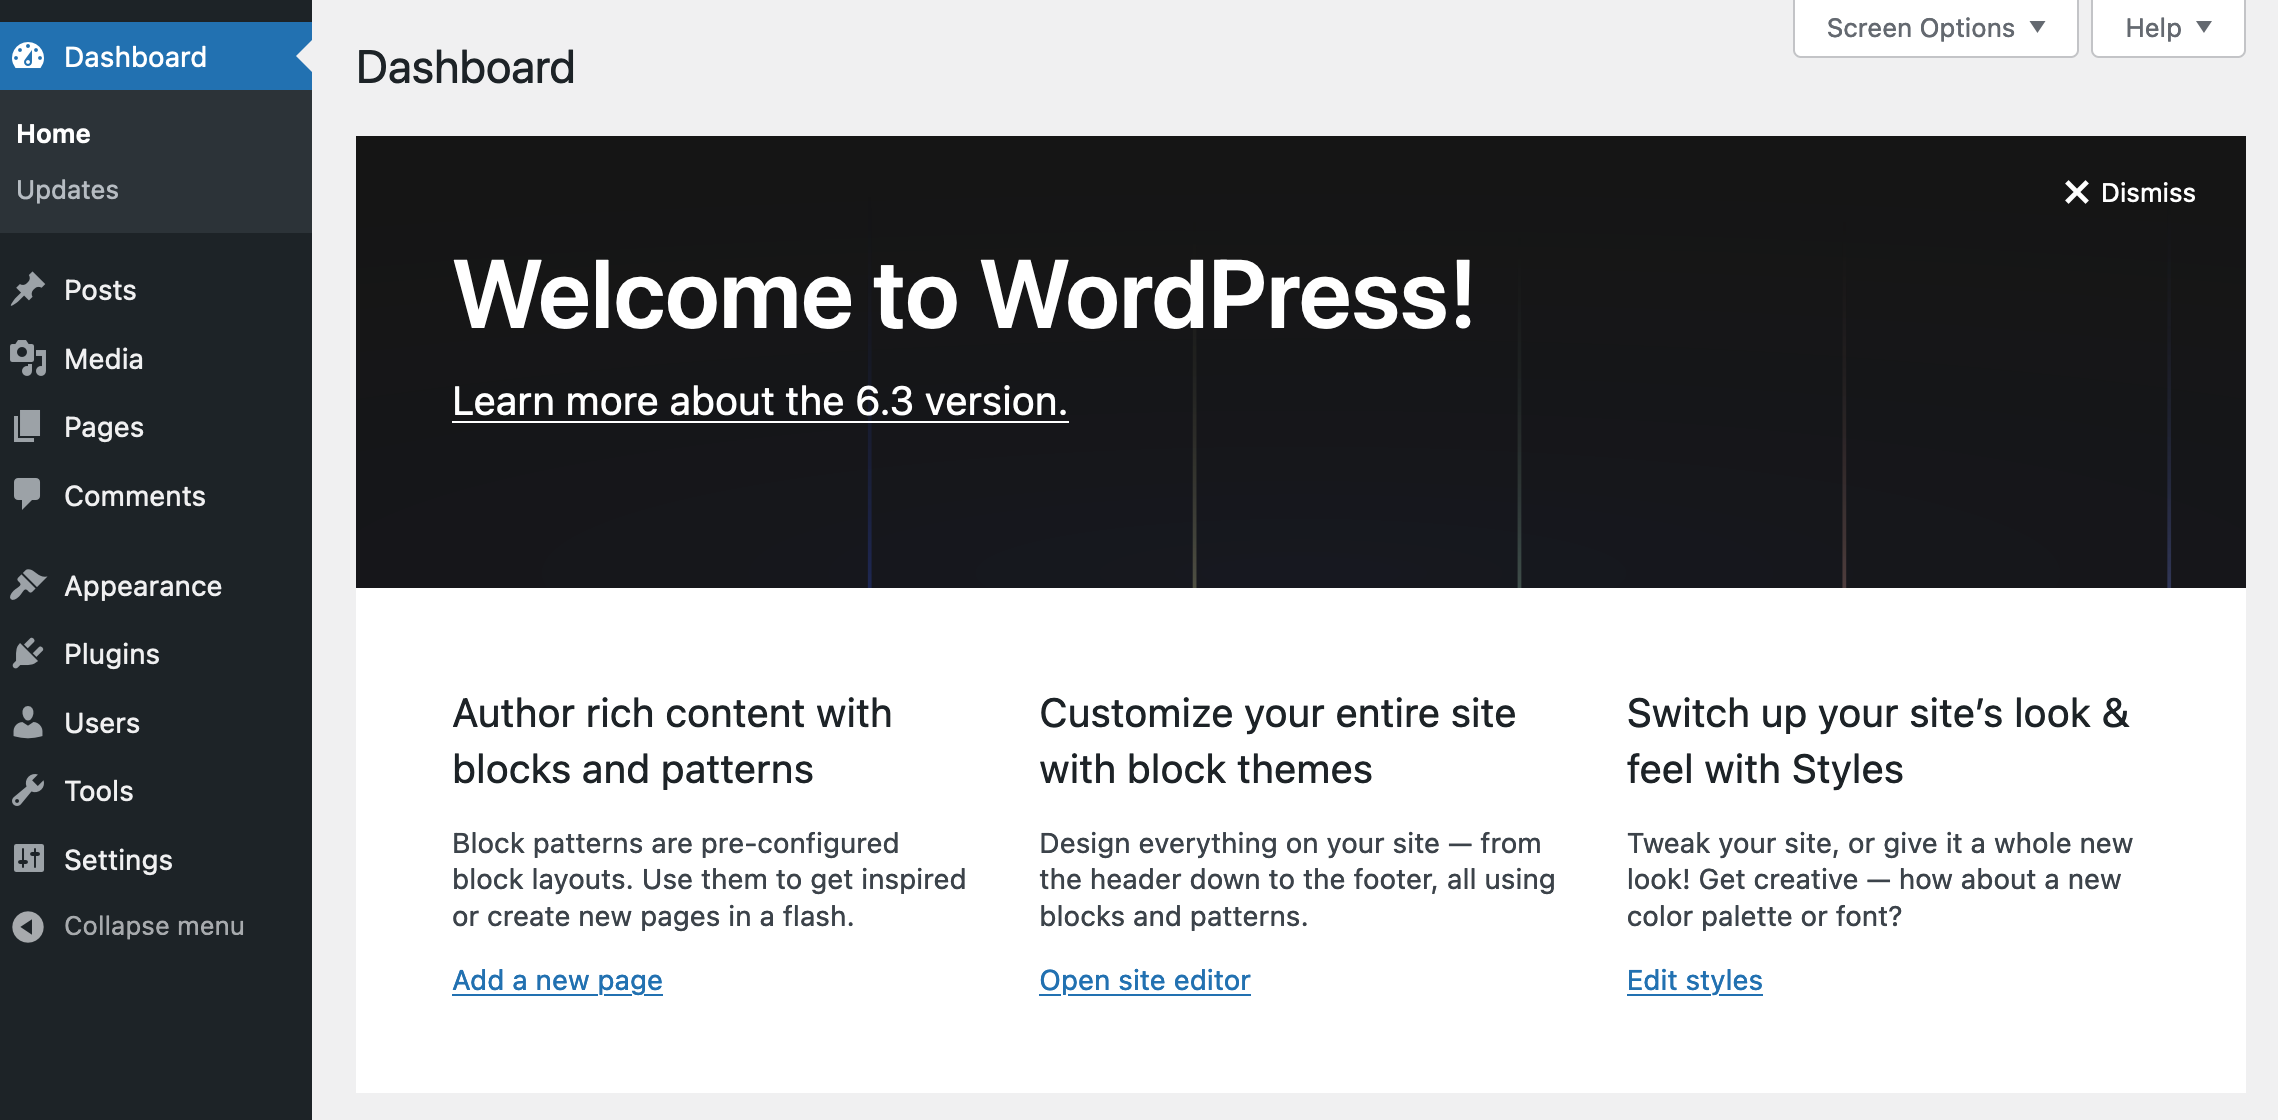 WordPress Dashboard